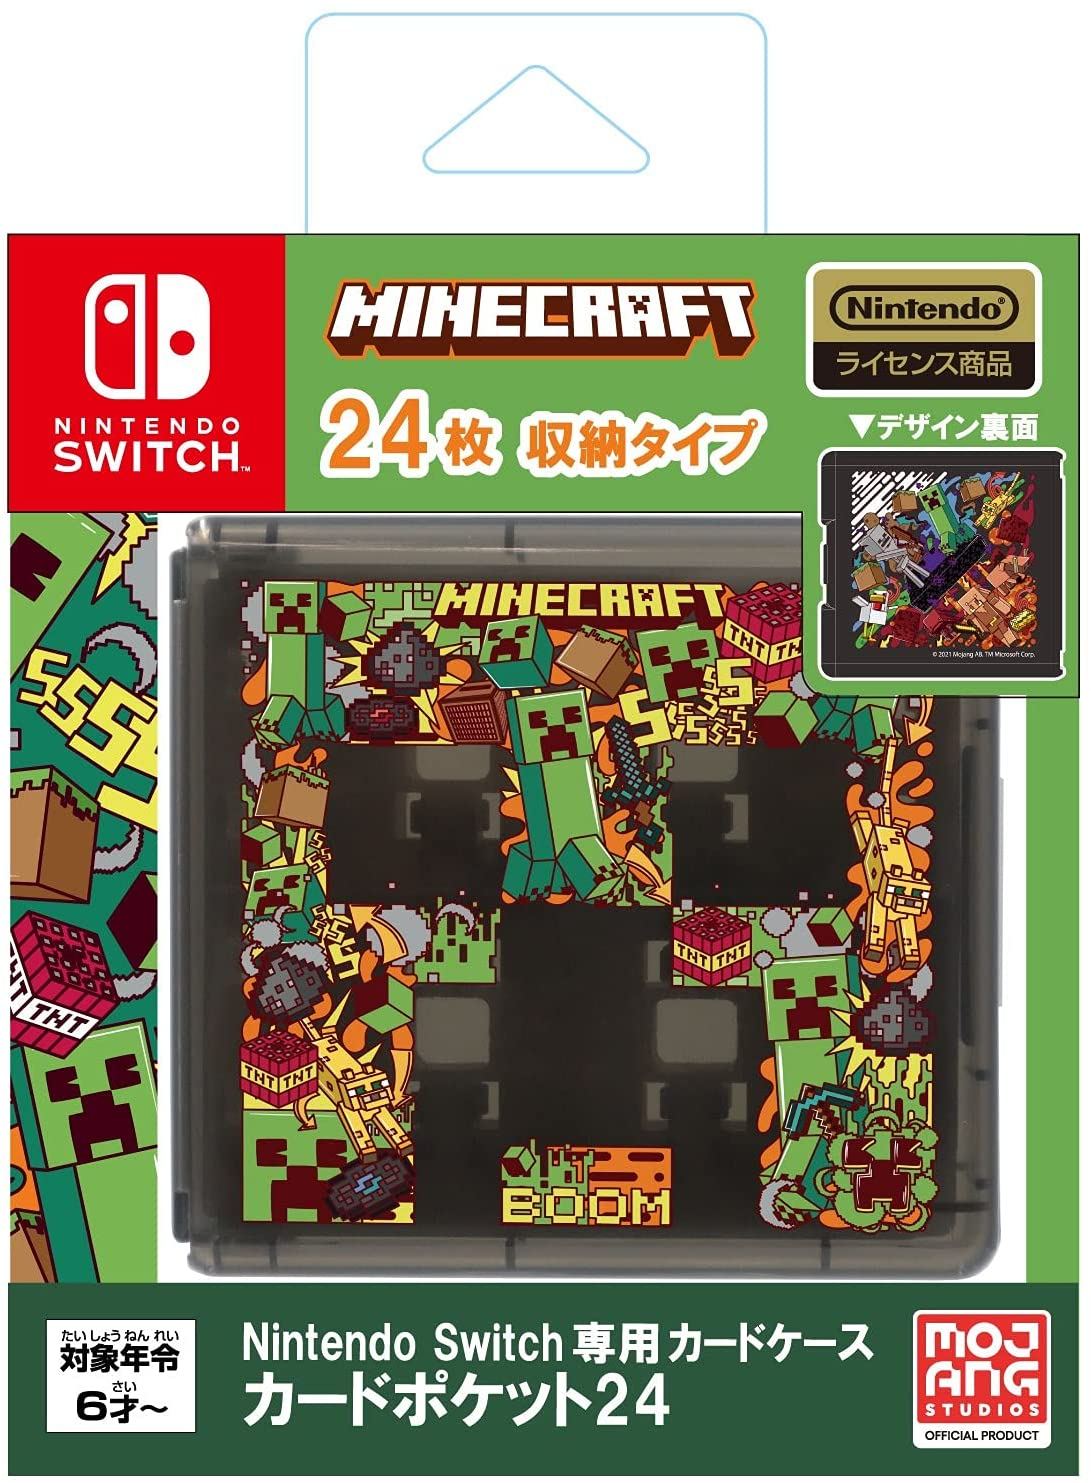 Nintendo Switch Card Pocket 24 (Minecraft) for Nintendo Switch